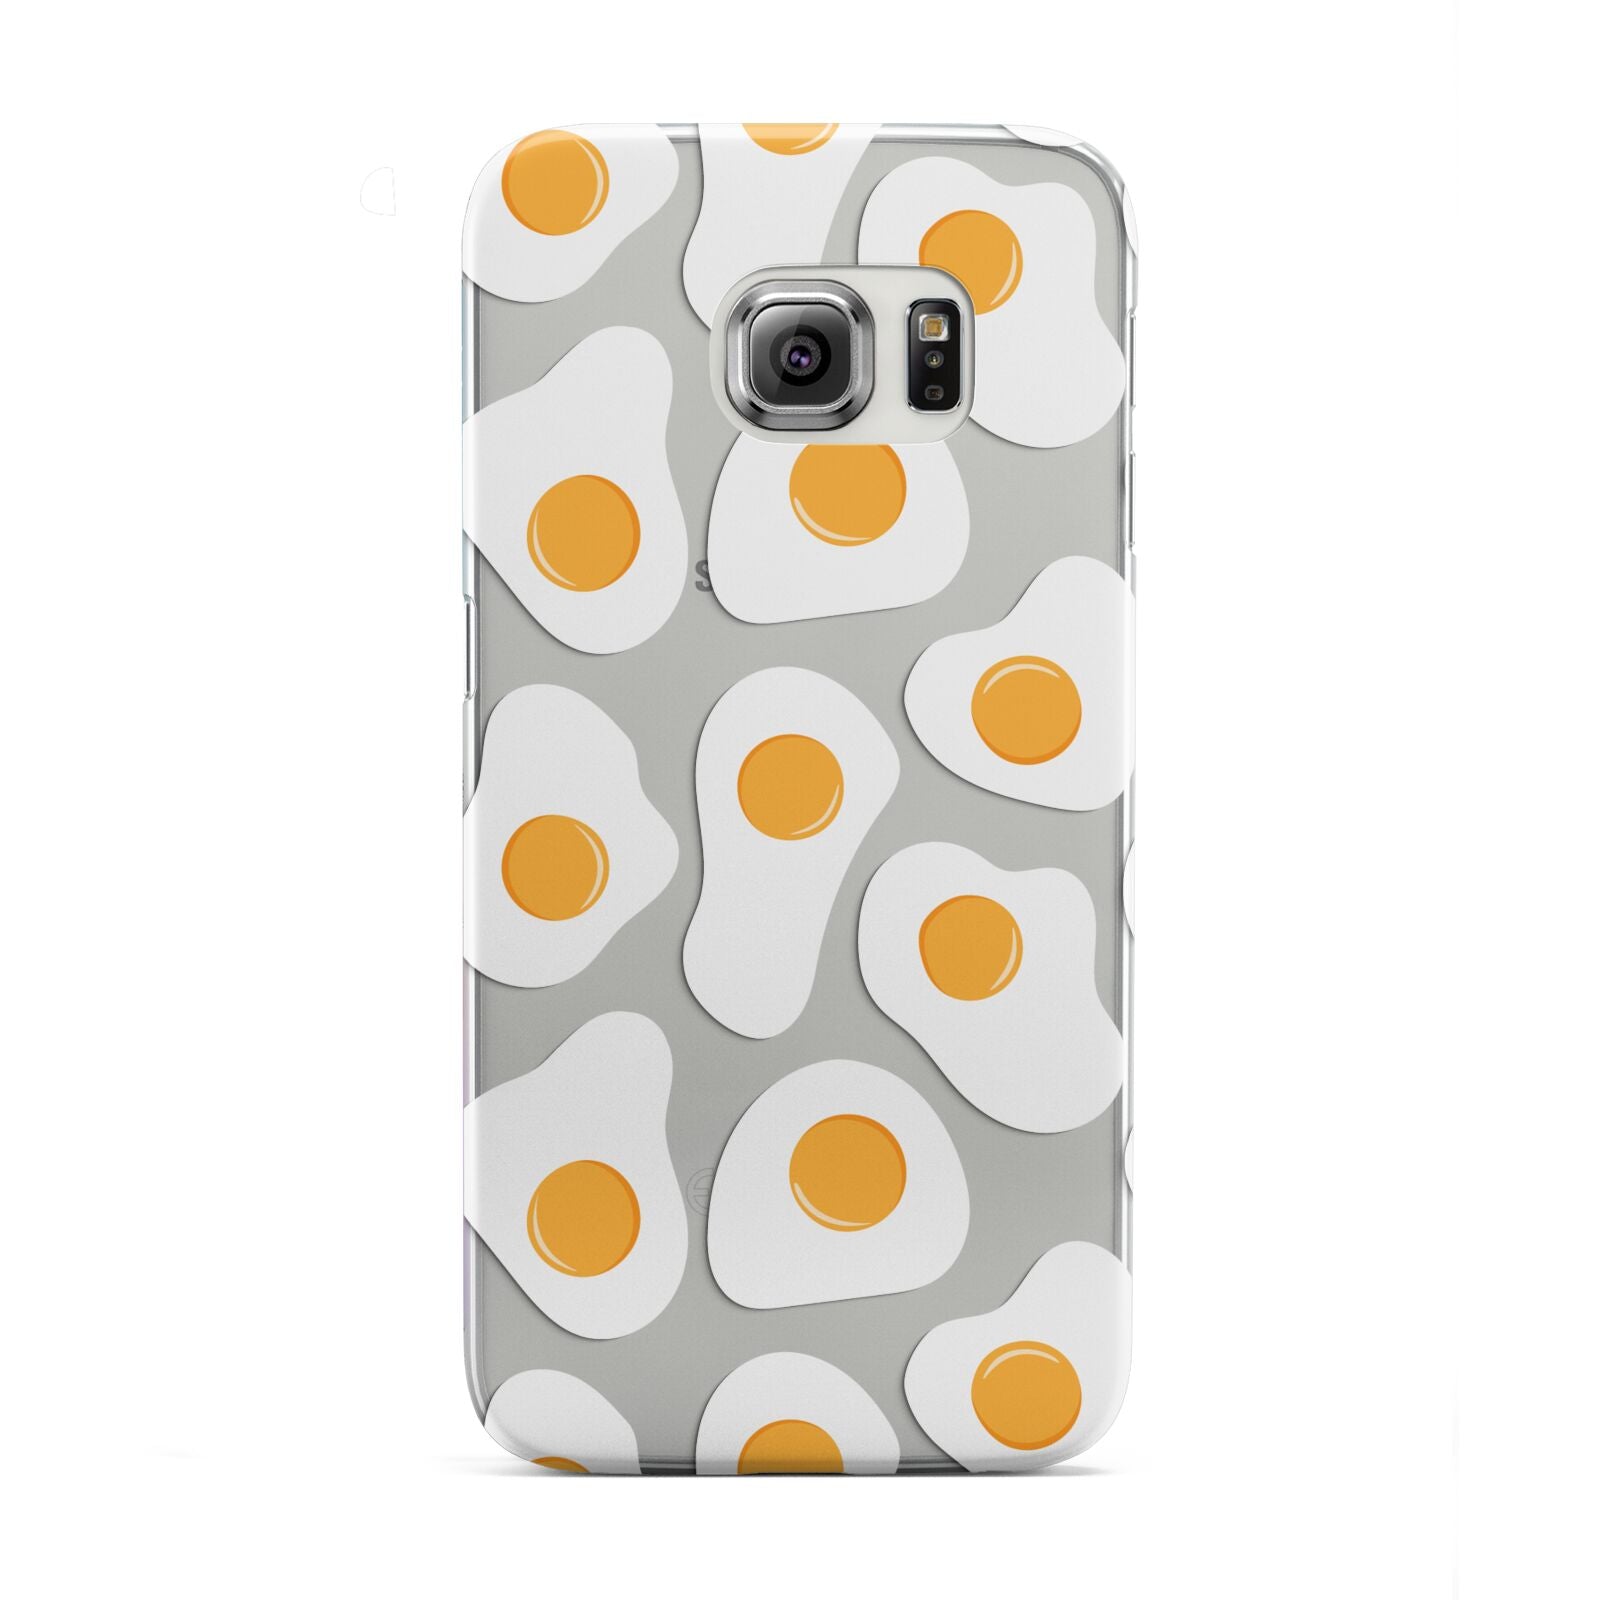 Fried Egg Samsung Galaxy S6 Edge Case